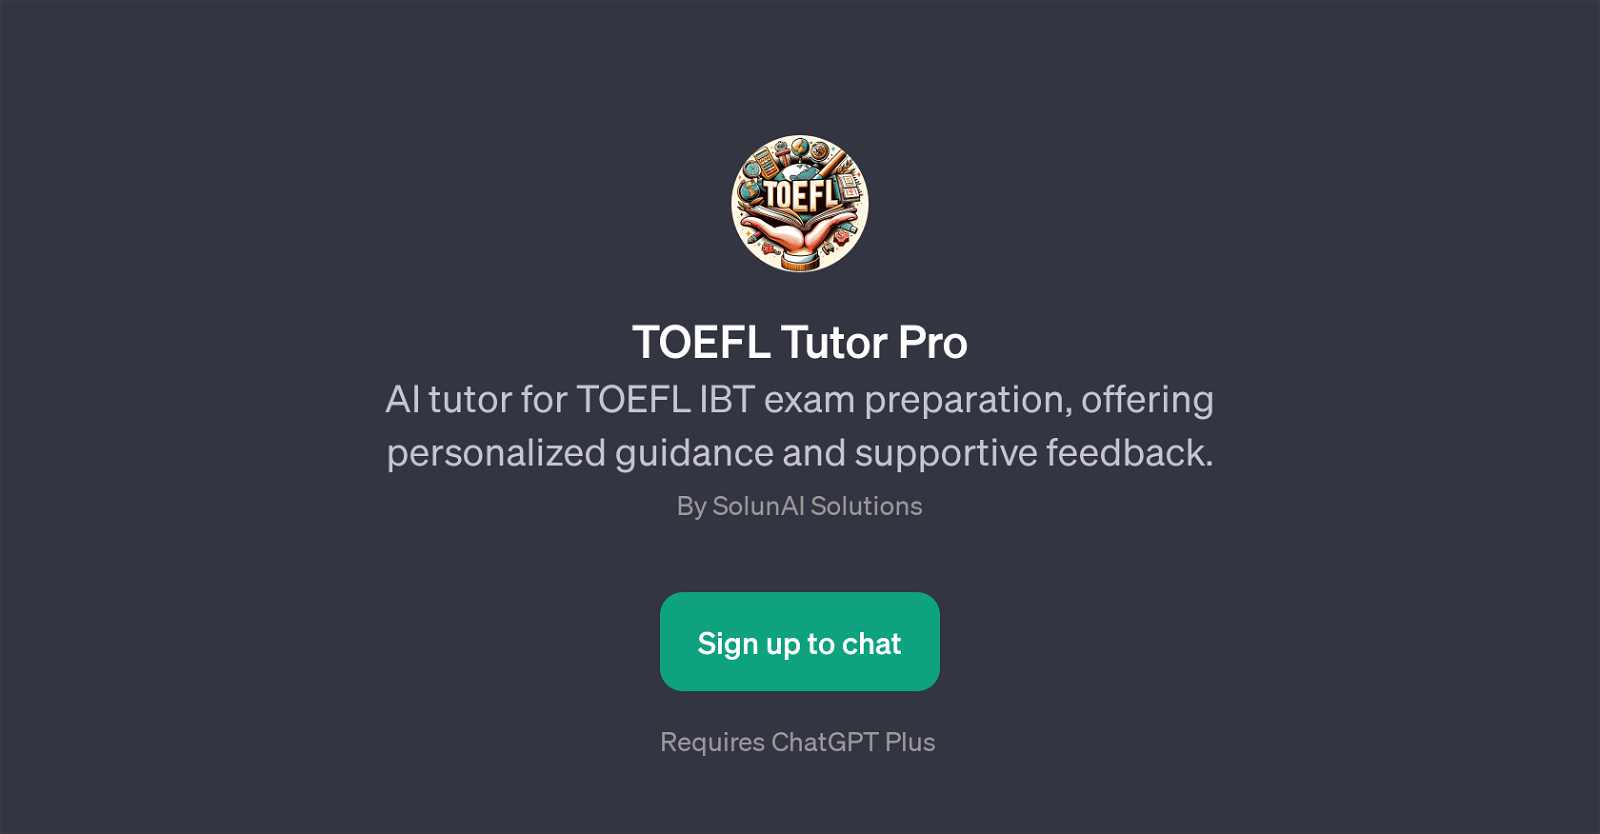 TOEFL Tutor Pro website